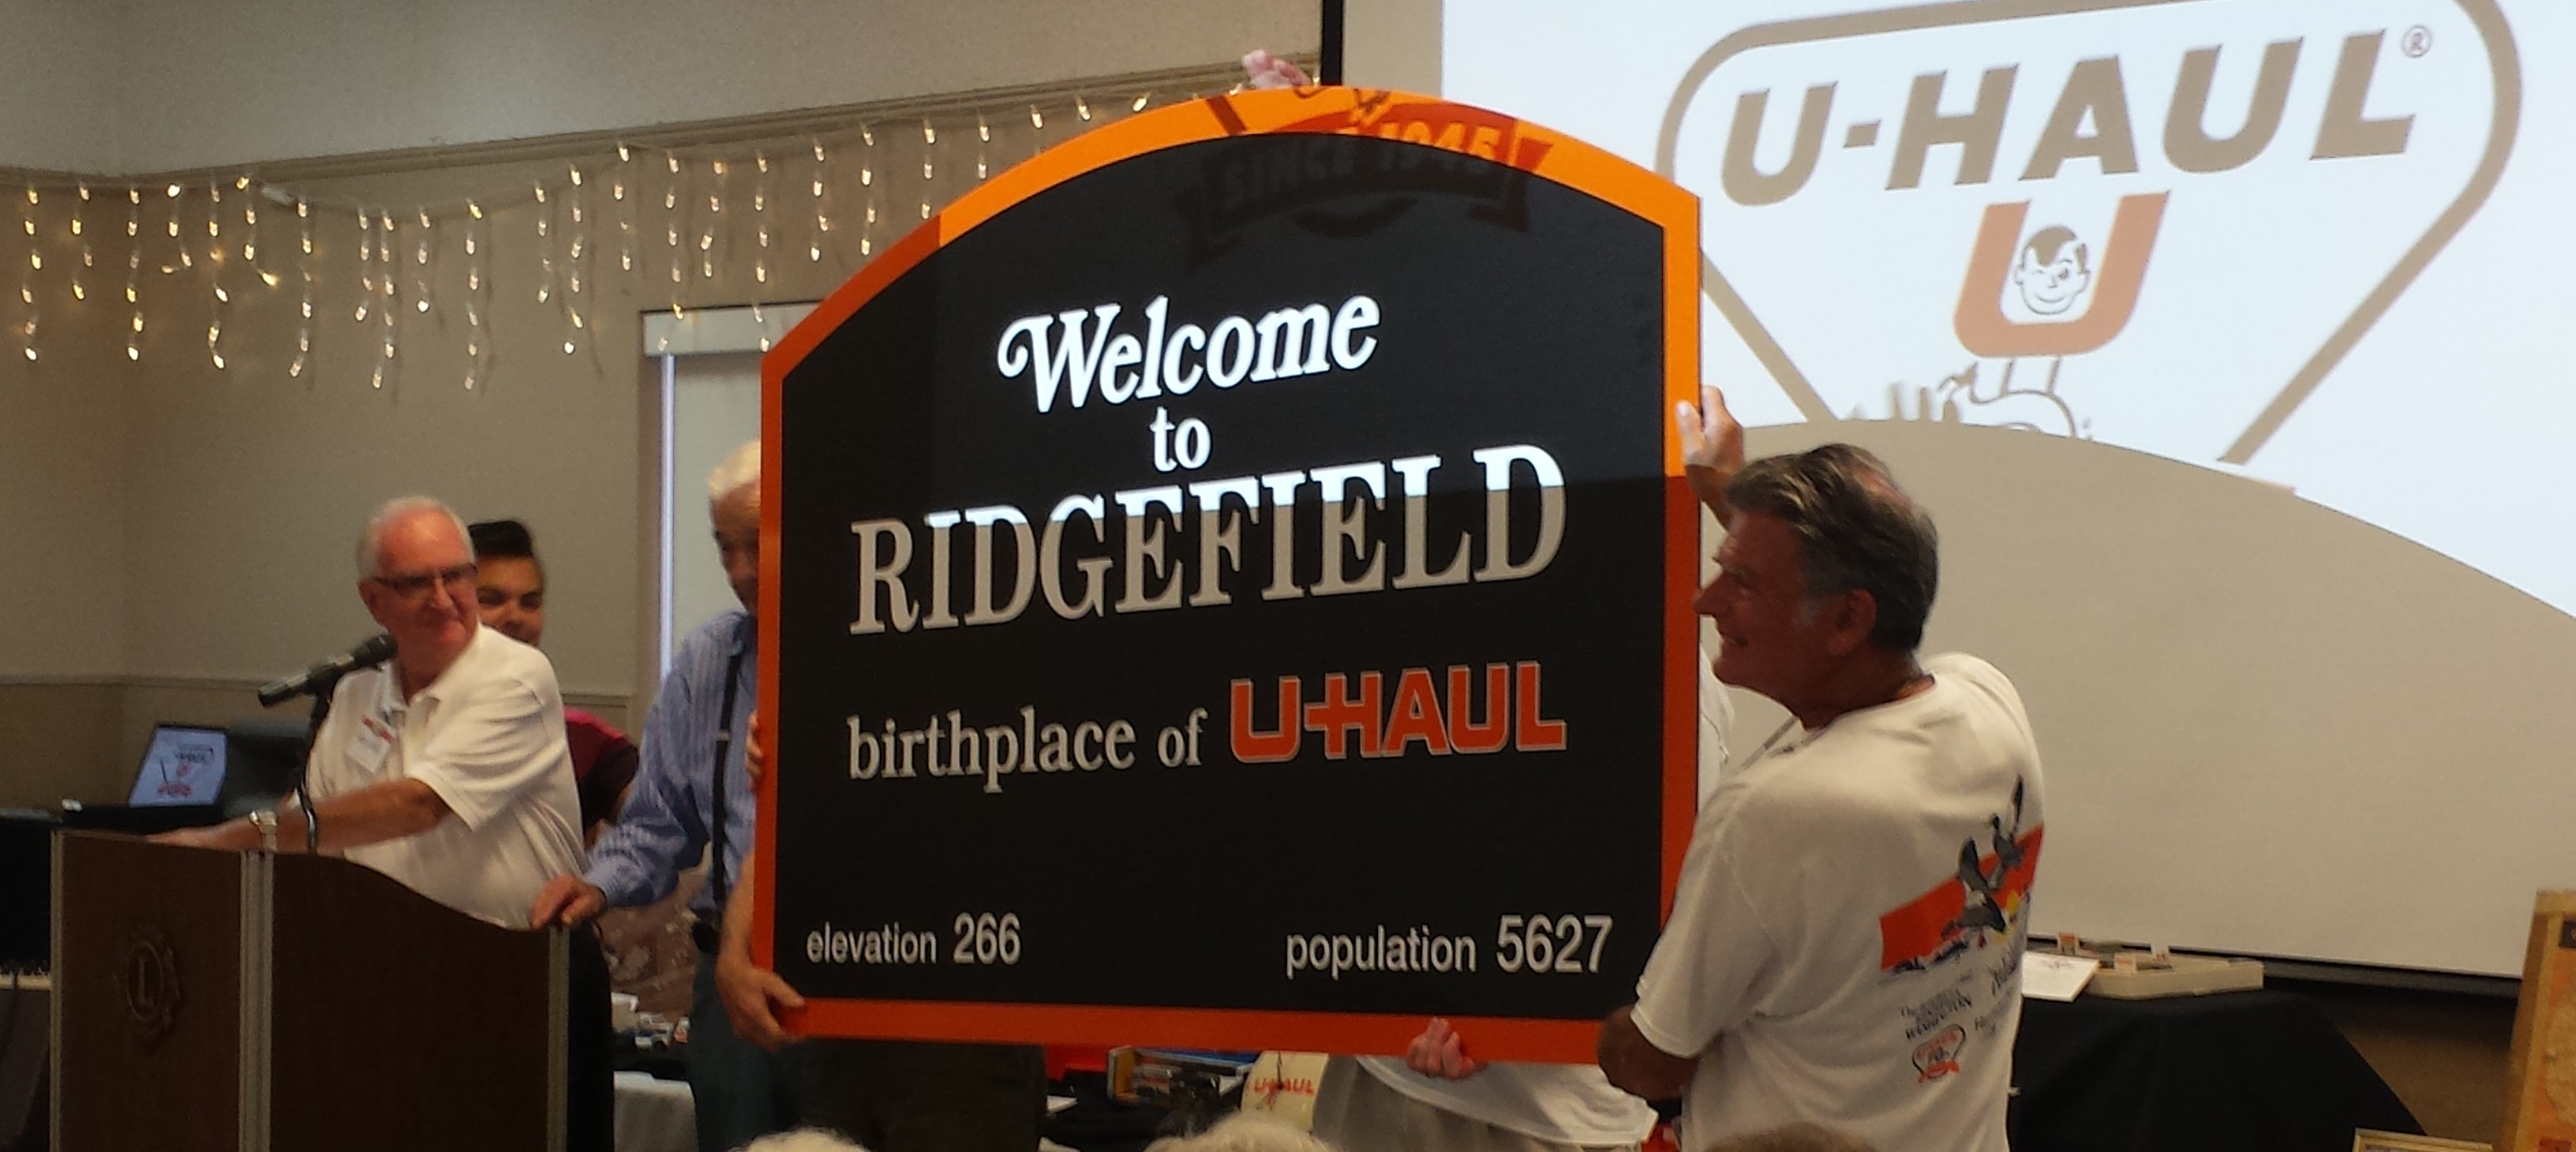 U-Haul History Celebrated at Ridgefield Heritage Day